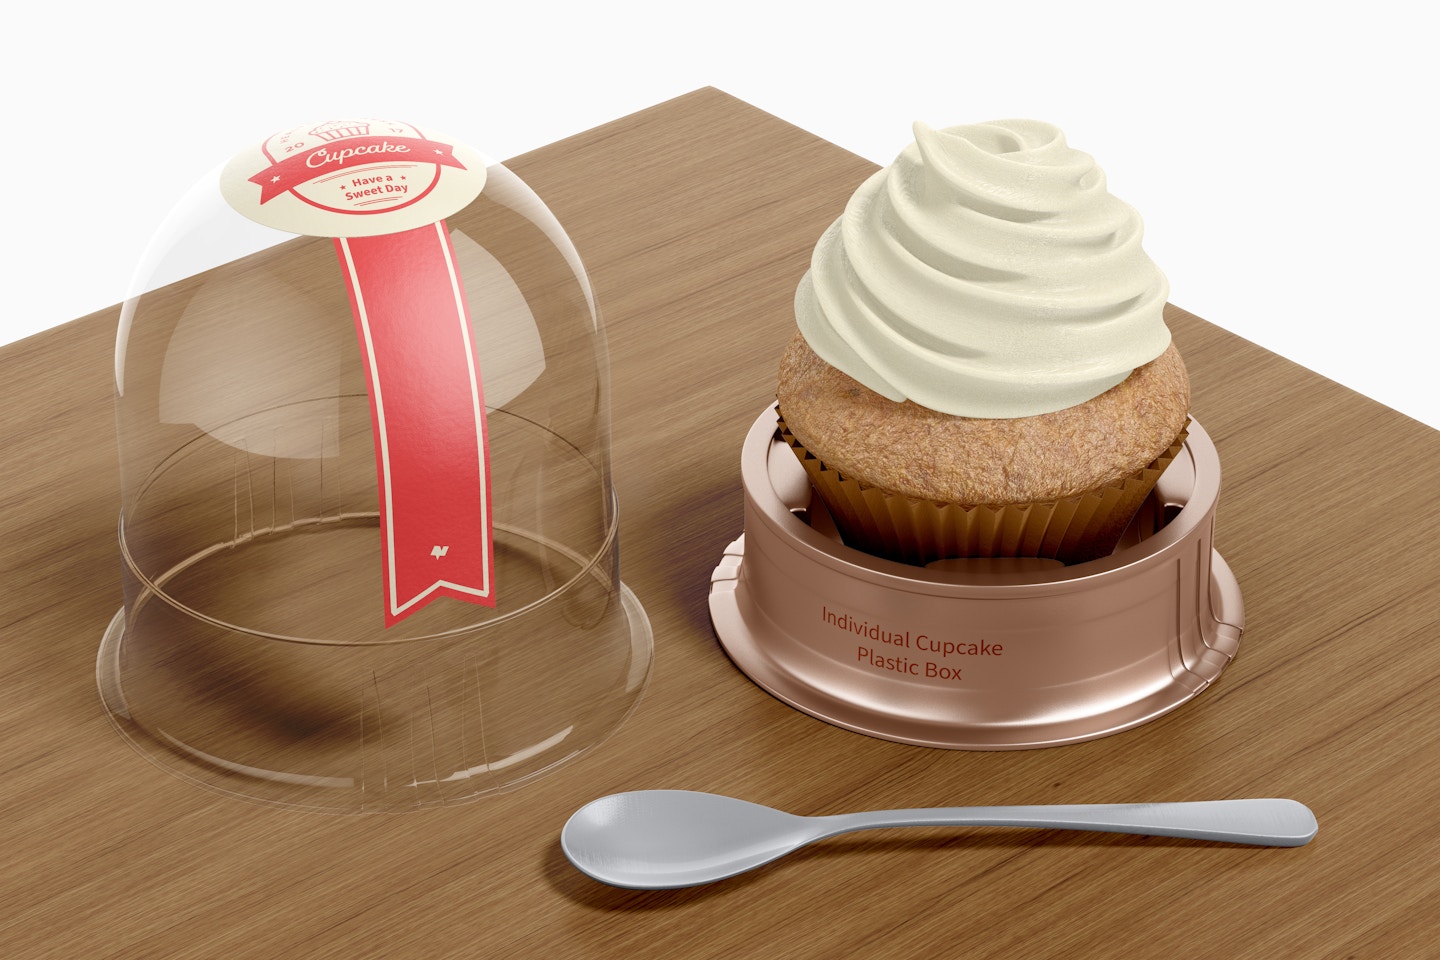 Individual Cupcake Plastic Box Mockup, Perspective